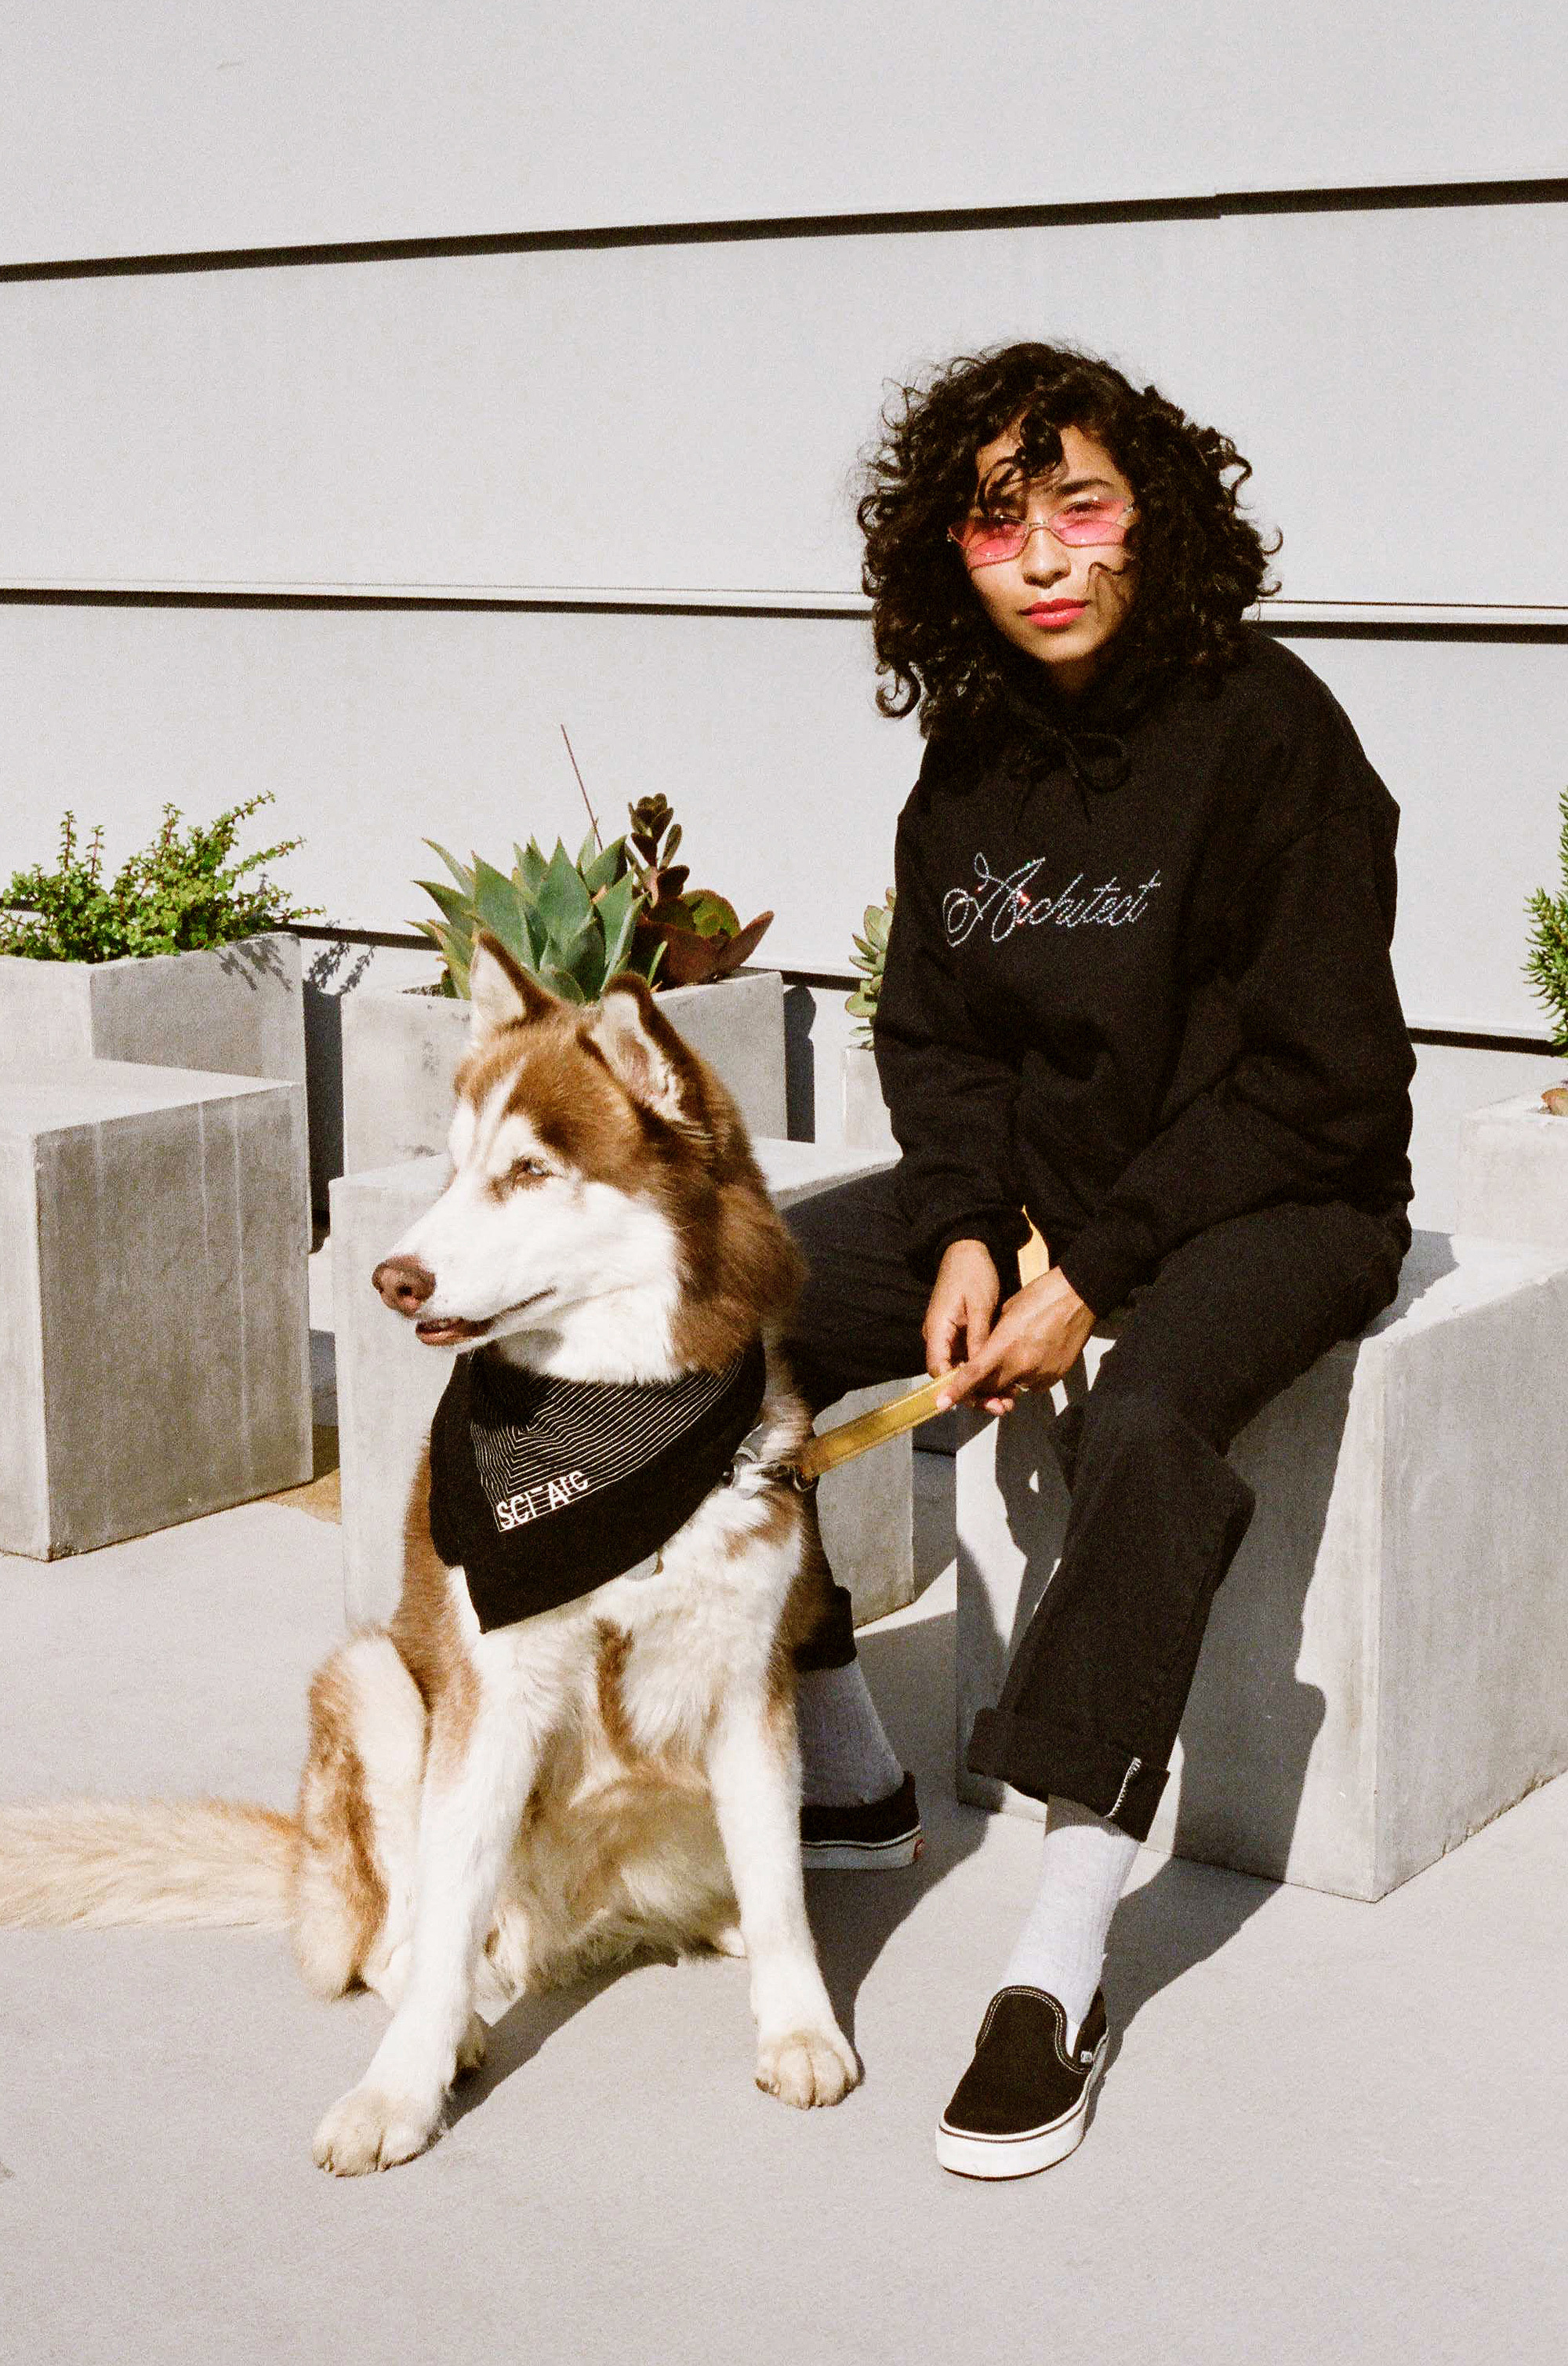 Saide Serna with dog SCI-Arc apparel